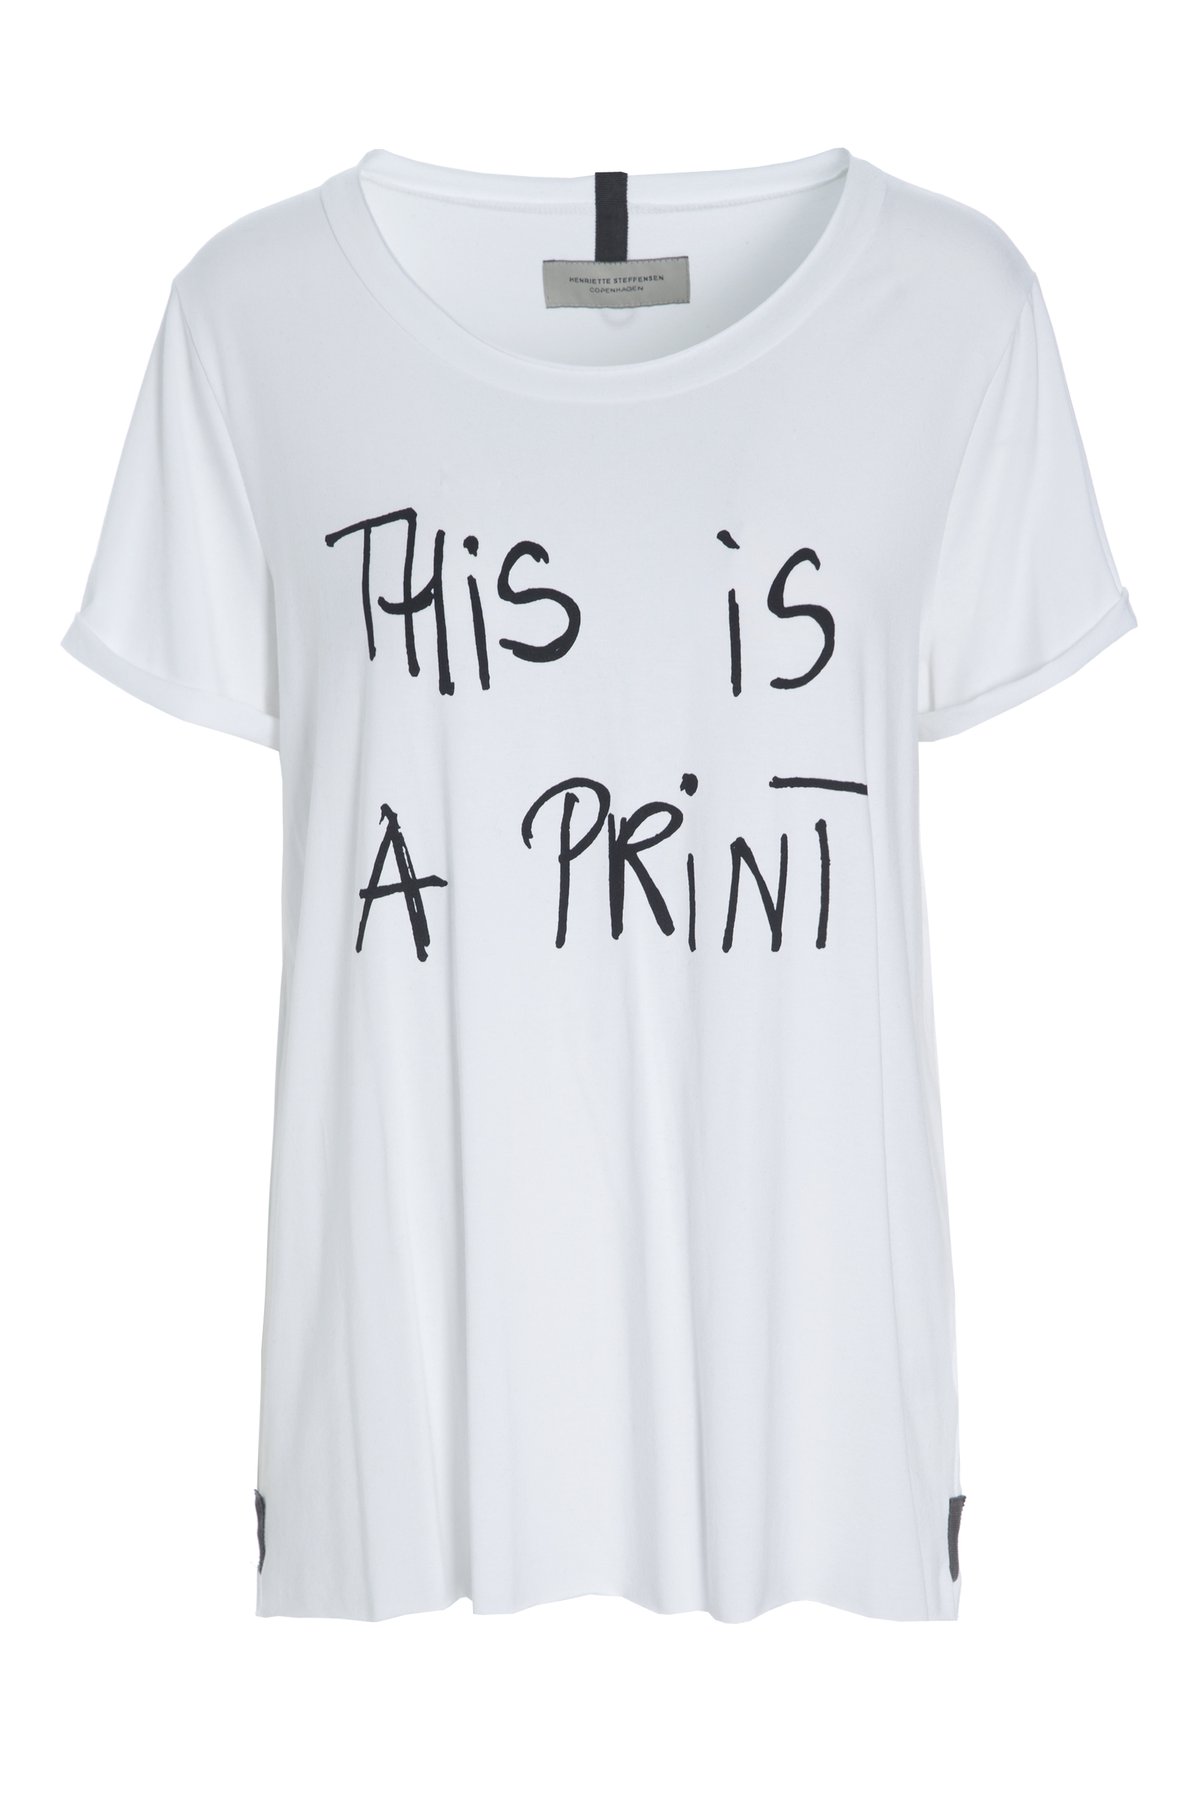 Henriette Steffensen T-Shirt - This is a print